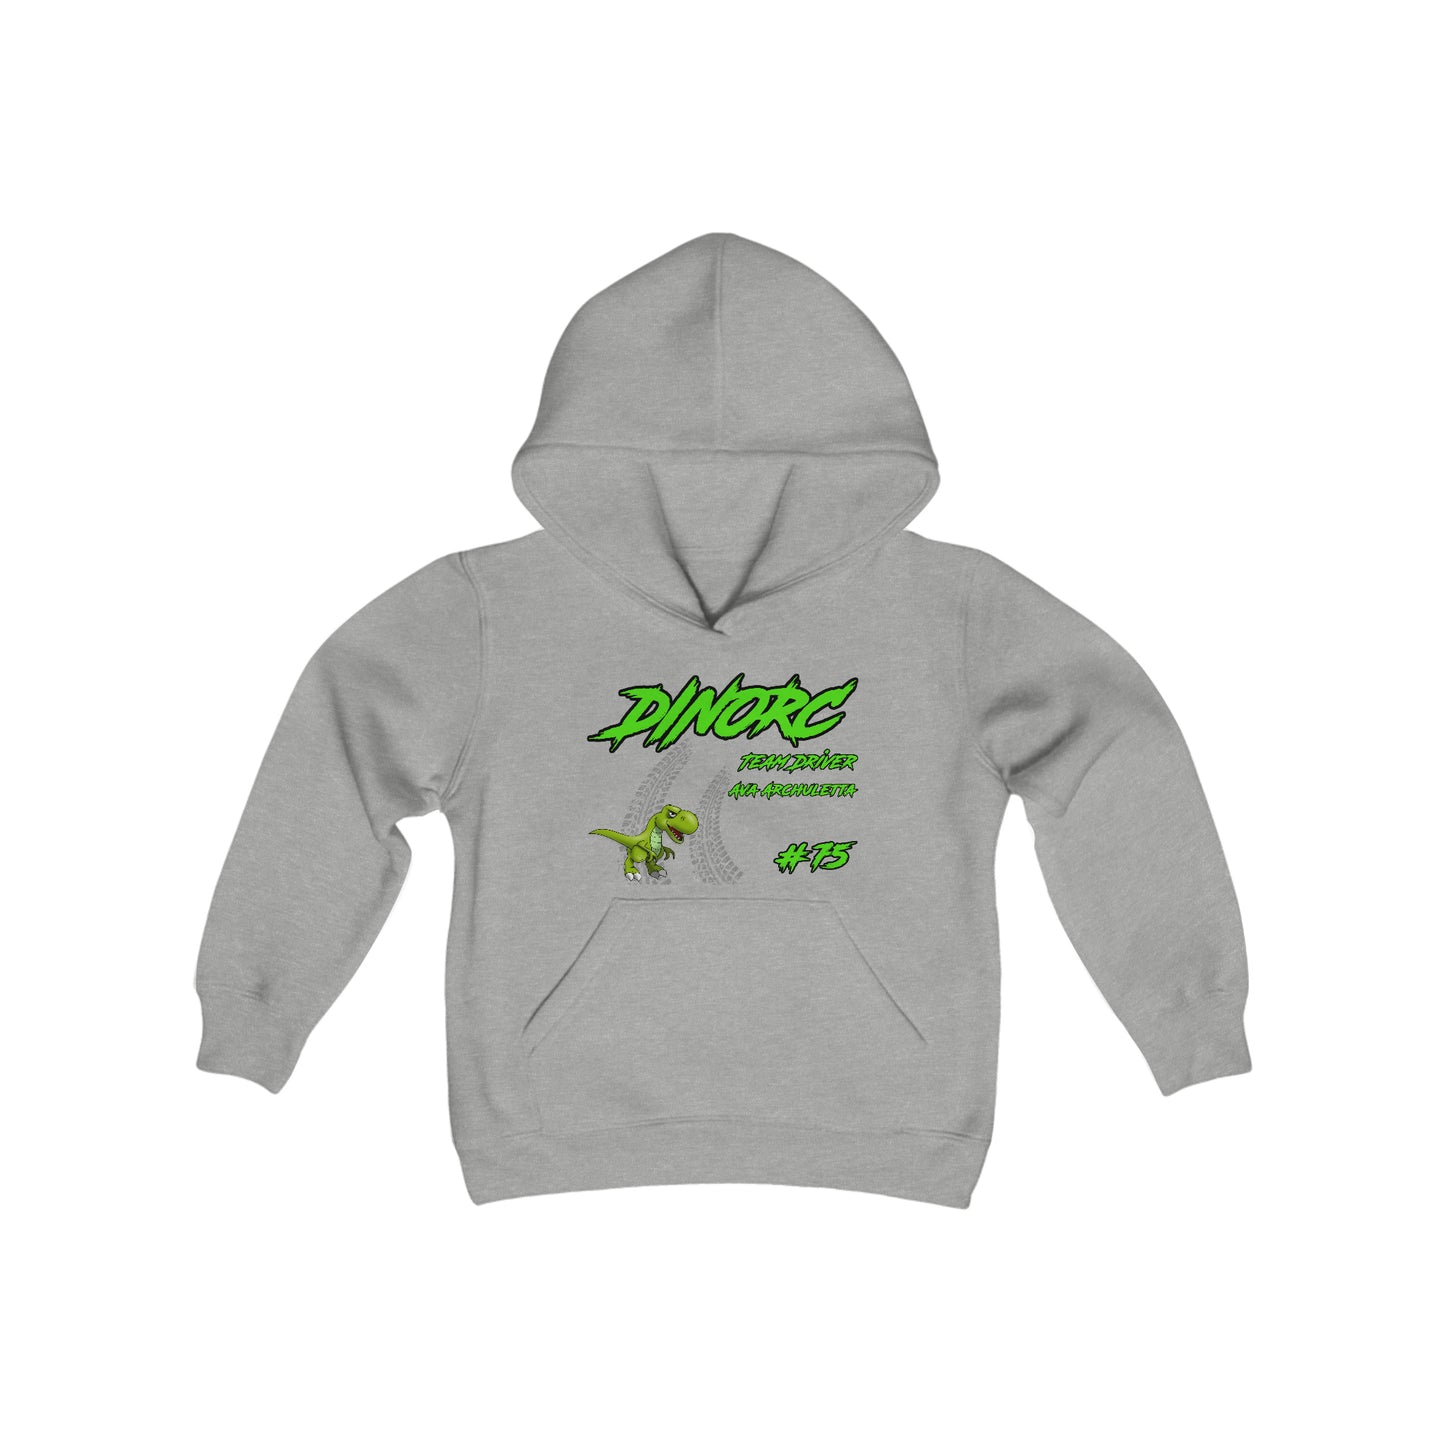 Ava Archuletta Team Driver DinoRC Logo Youth Heavy Blend Hooded Sweatshirt